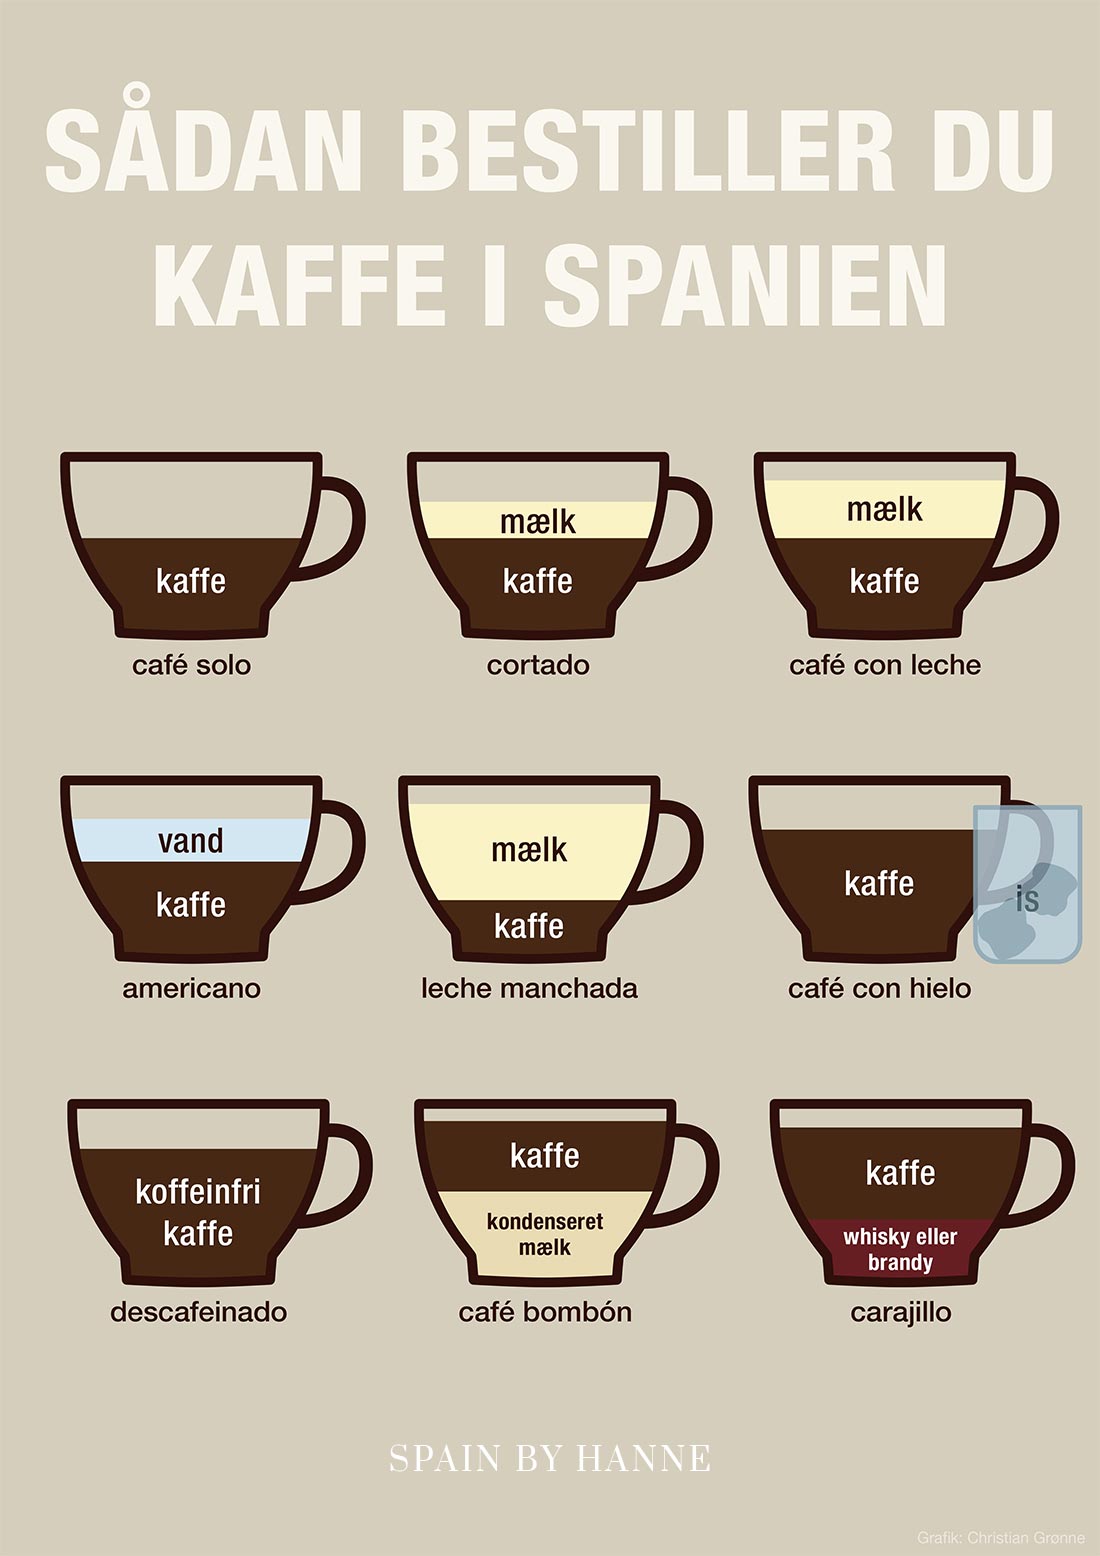 Sådan bestiller du kaffe i Spanien - infografik